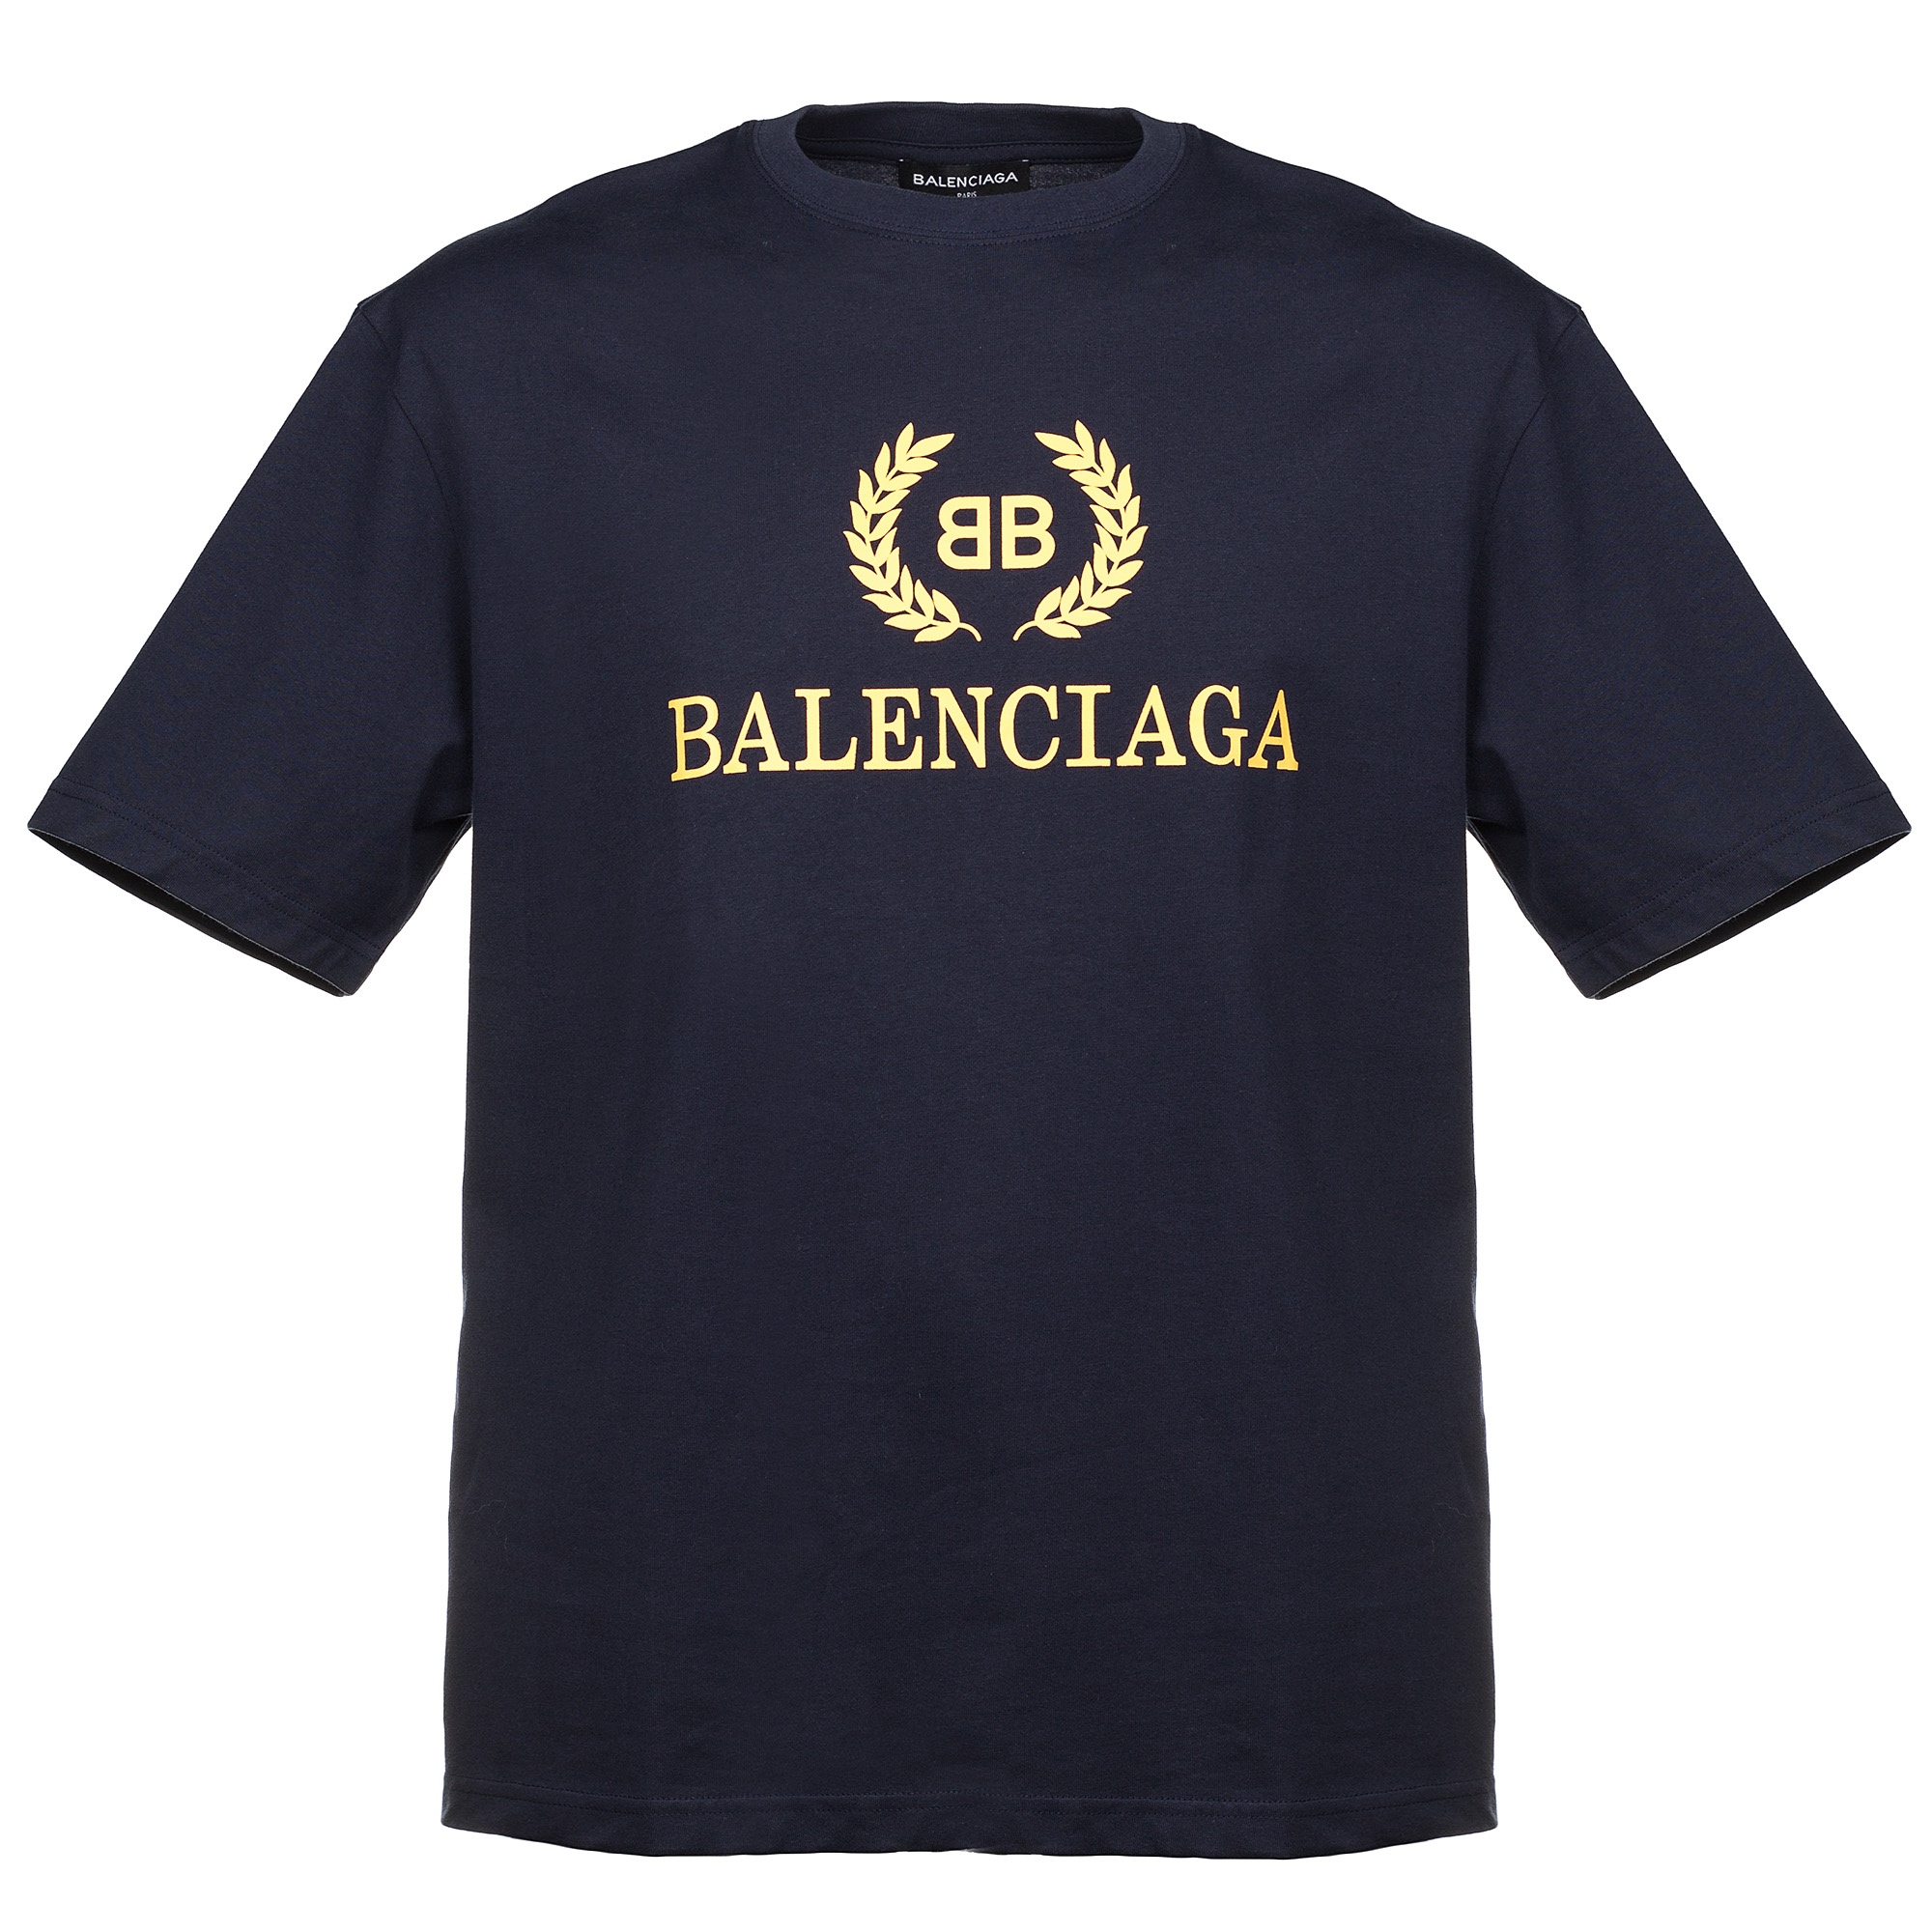 Футболка Баленсиага мужская. Футболка Balenciaga голубая. Майка Баленсиага. Хоккейная майка Баленсиага.